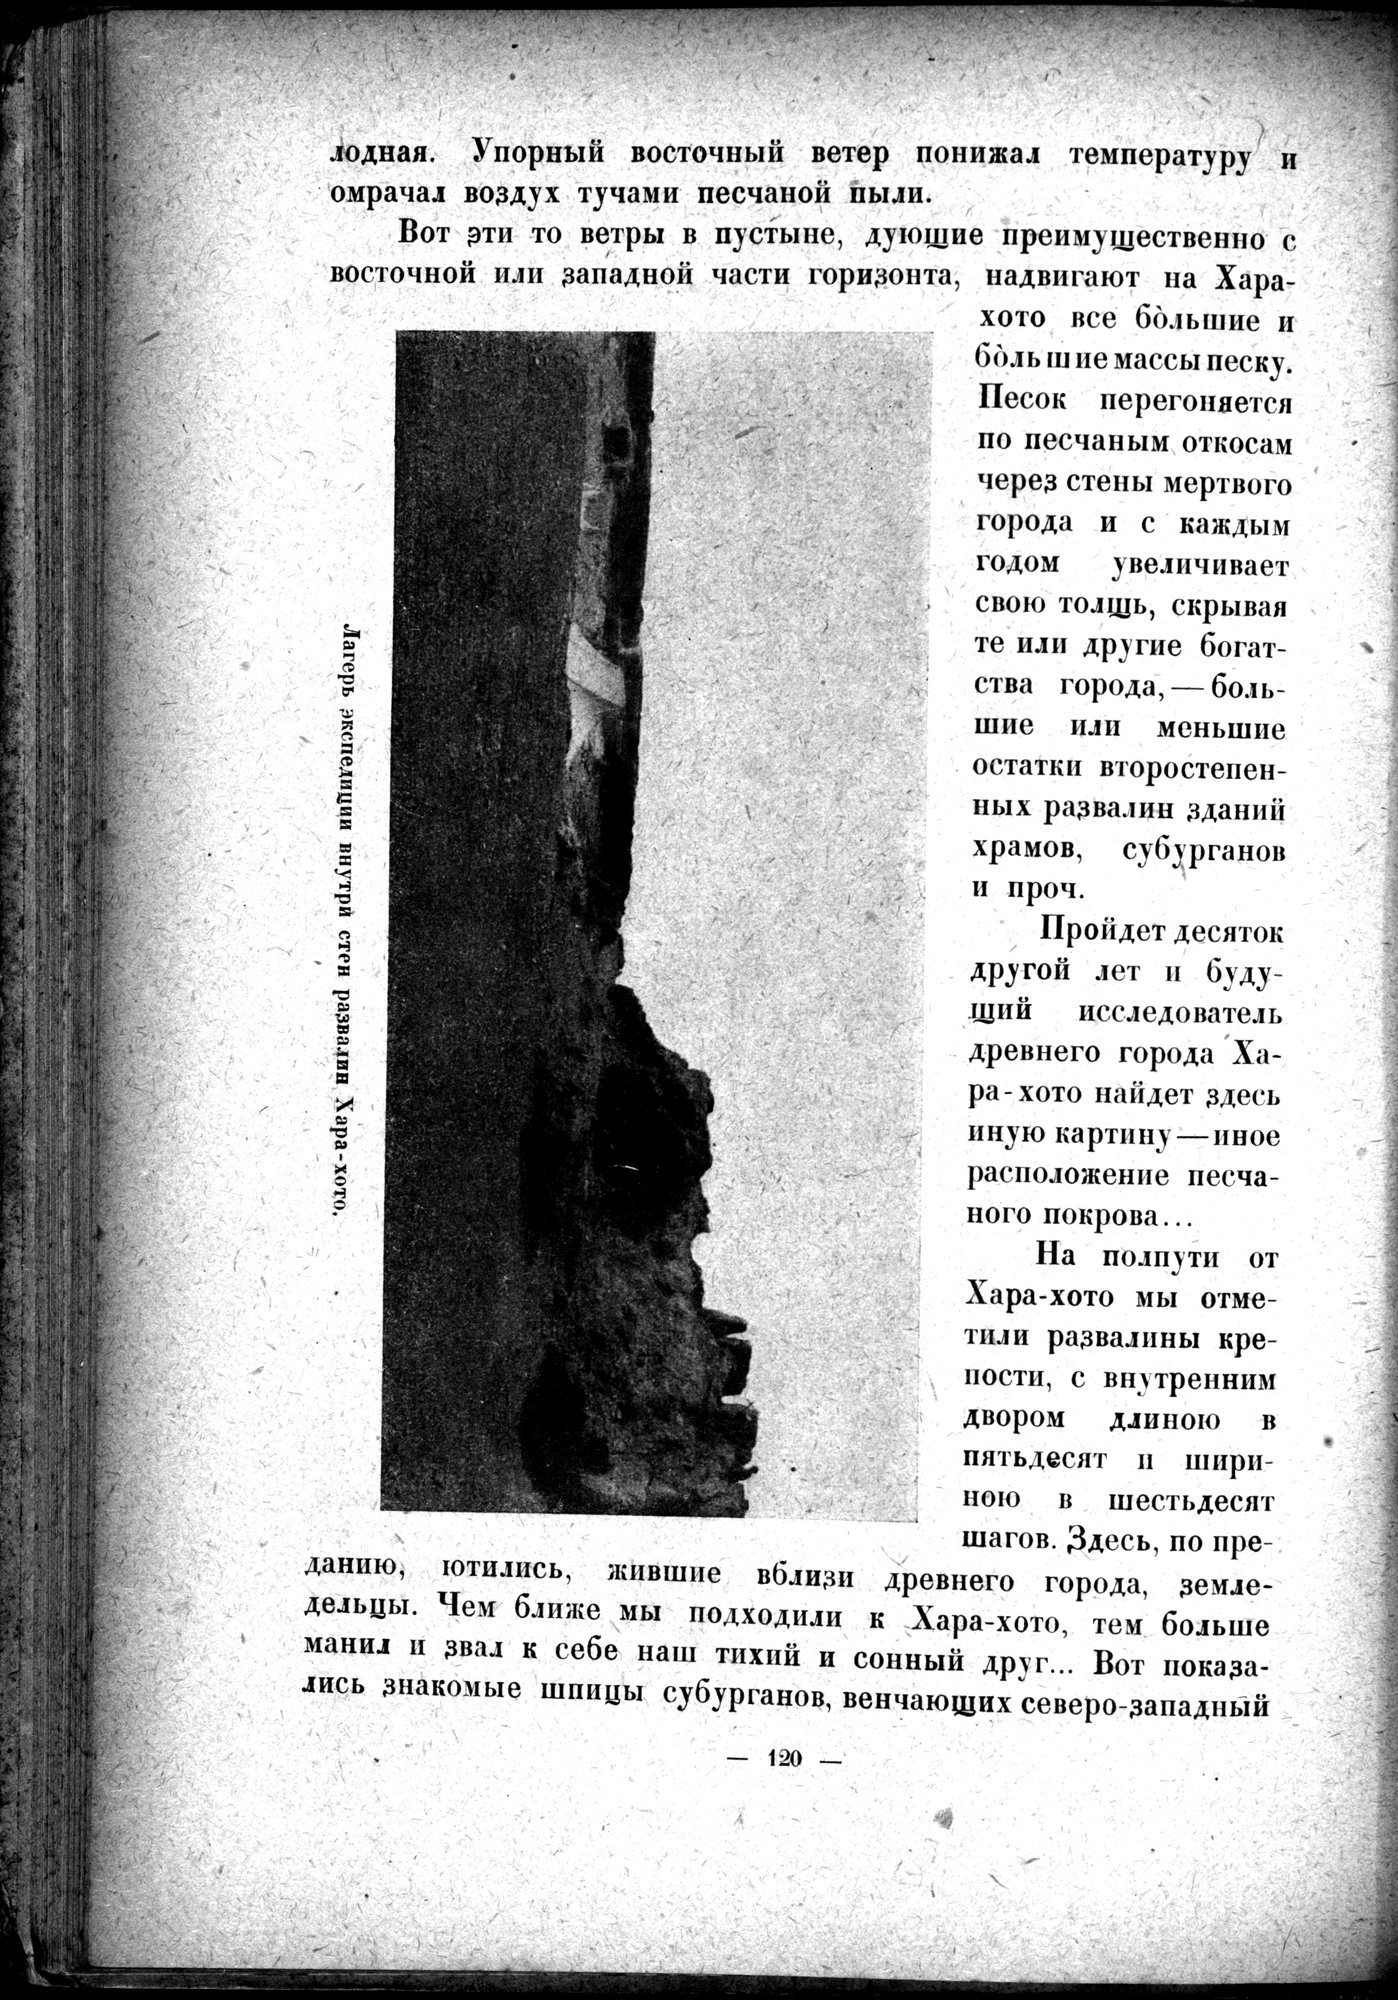 Mongoliya i Amdo i mertby gorod Khara-Khoto : vol.1 / Page 146 (Grayscale High Resolution Image)